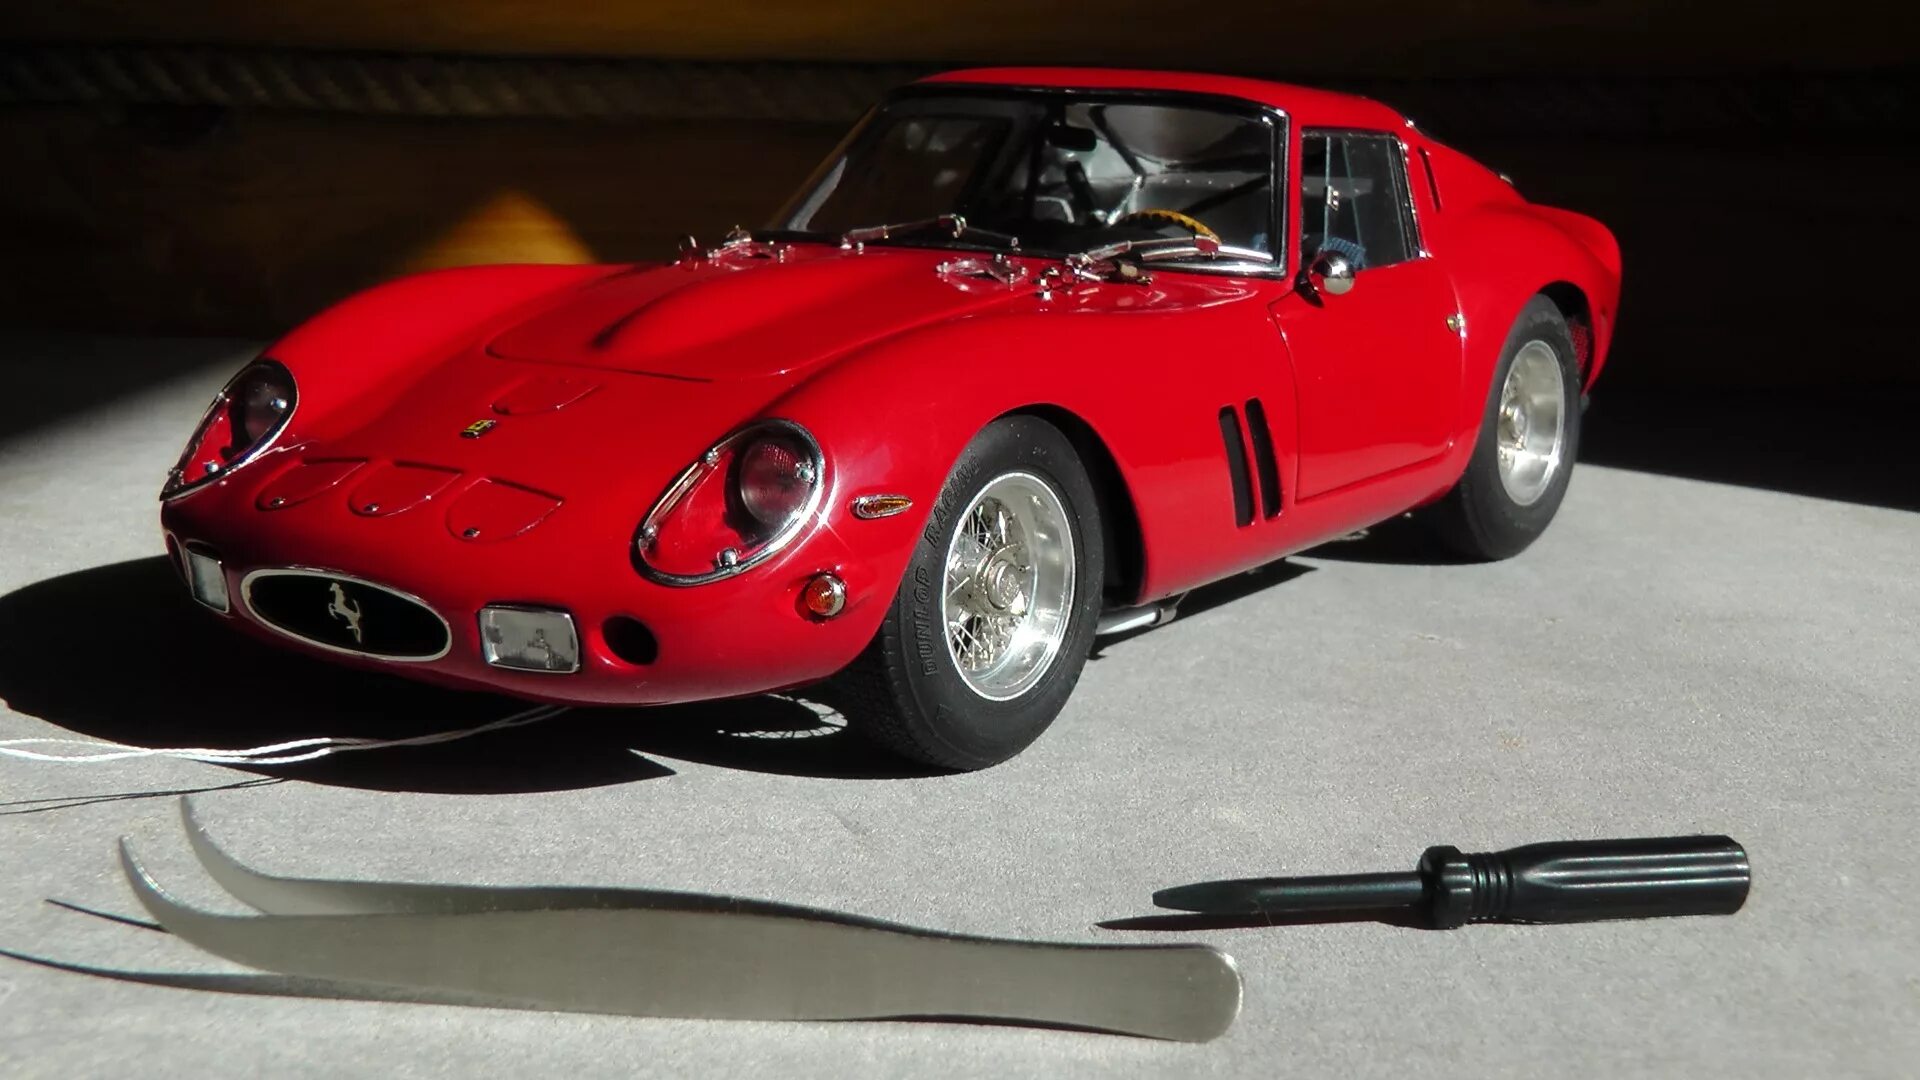 Ferrari 250 gto 1962. Феррари 250 GTO 1/18 CMC. CMC Ferrari 250 GTO. Ferrari 250 GTO 1962 года. 250 GTO Nissan.